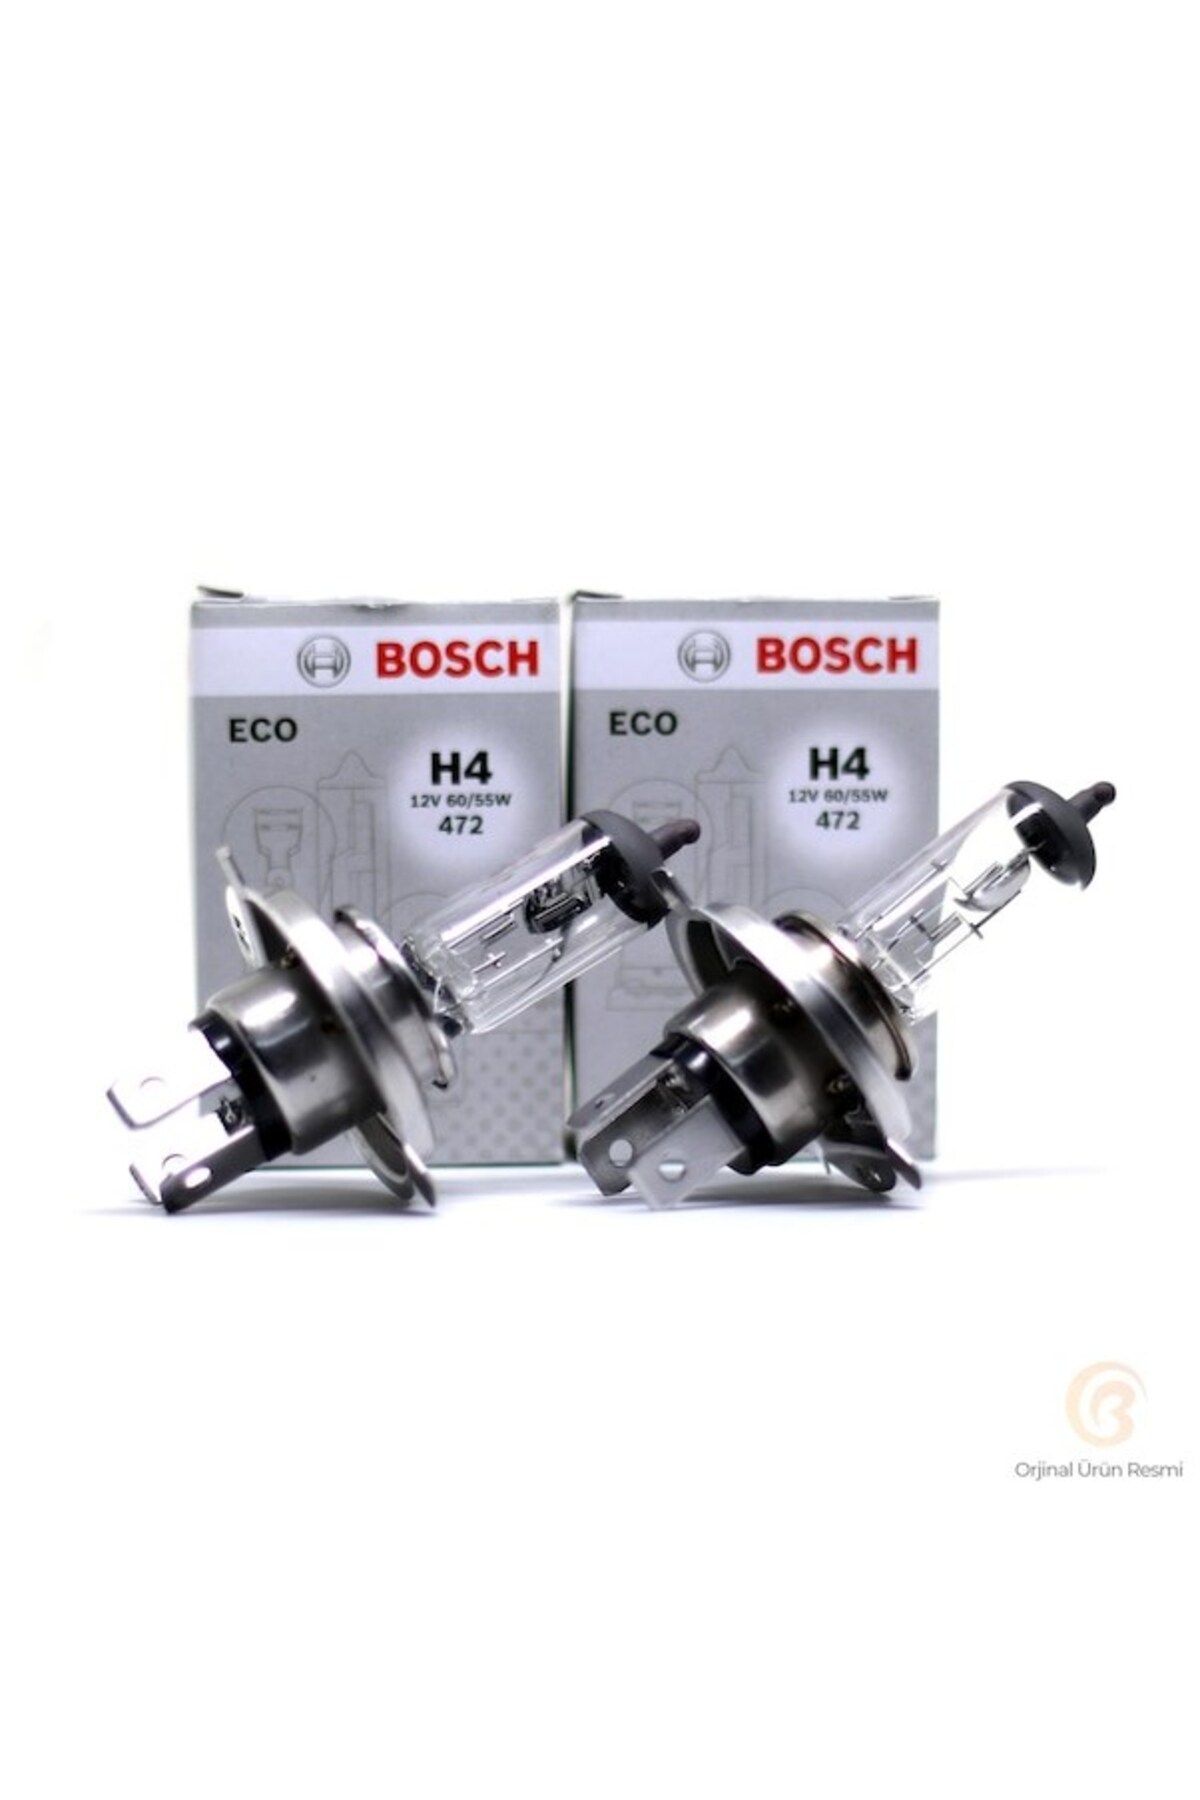 Bosch H4 Far Ampülü 12V 60 55W Tırnaklı Tip 1987302803 - 2 Adet Uyumlu